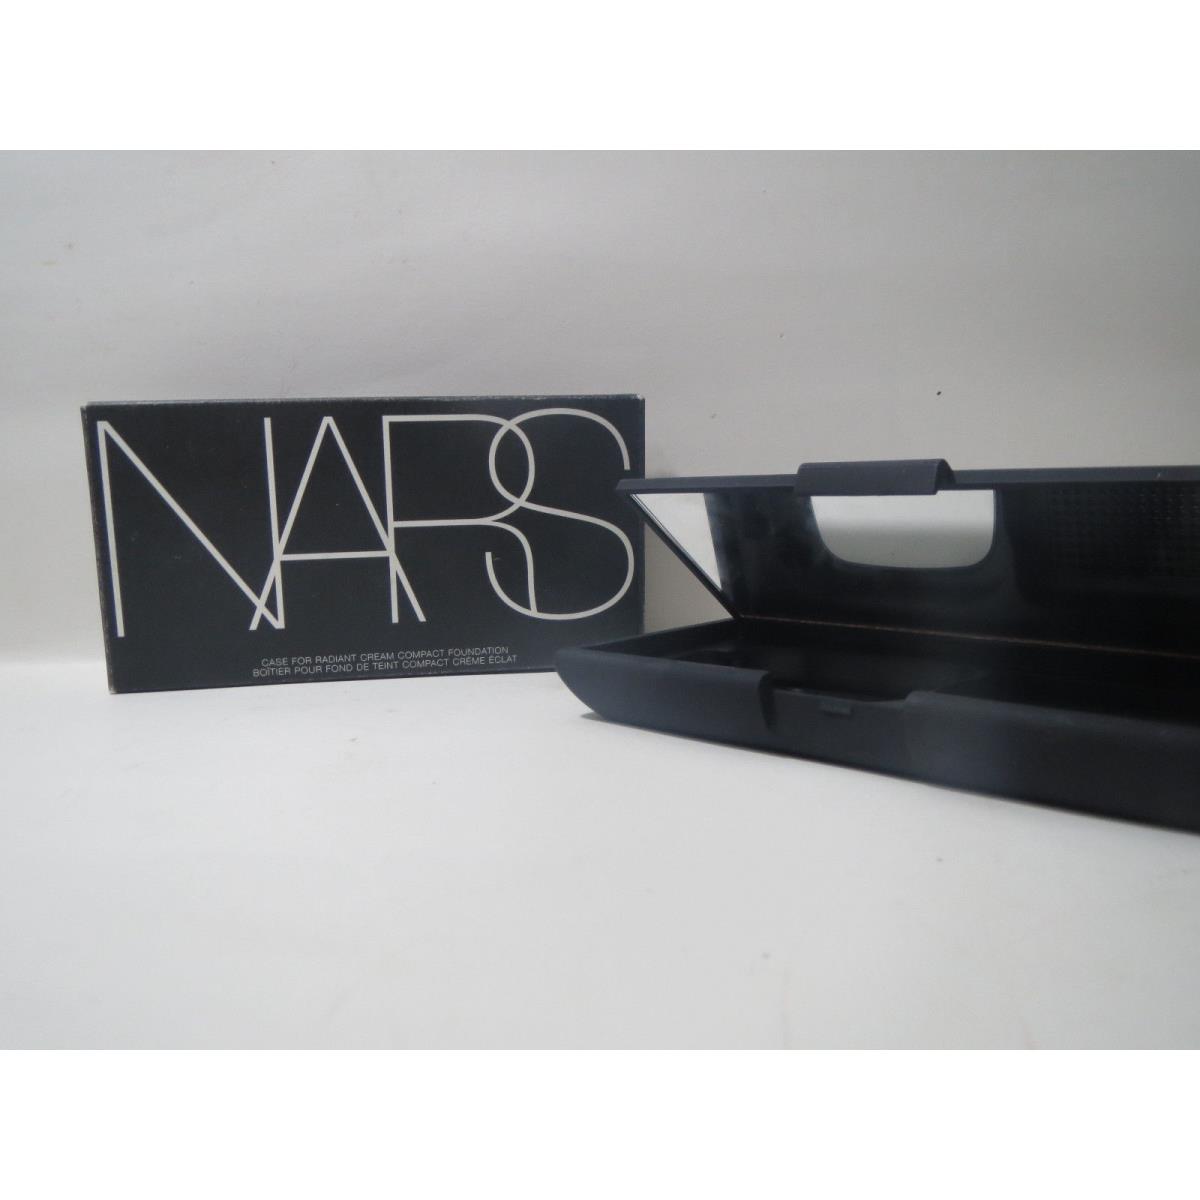 Picture of NARS NARSECC11 Radiant Cream Compact Foundation Empty Compact Case